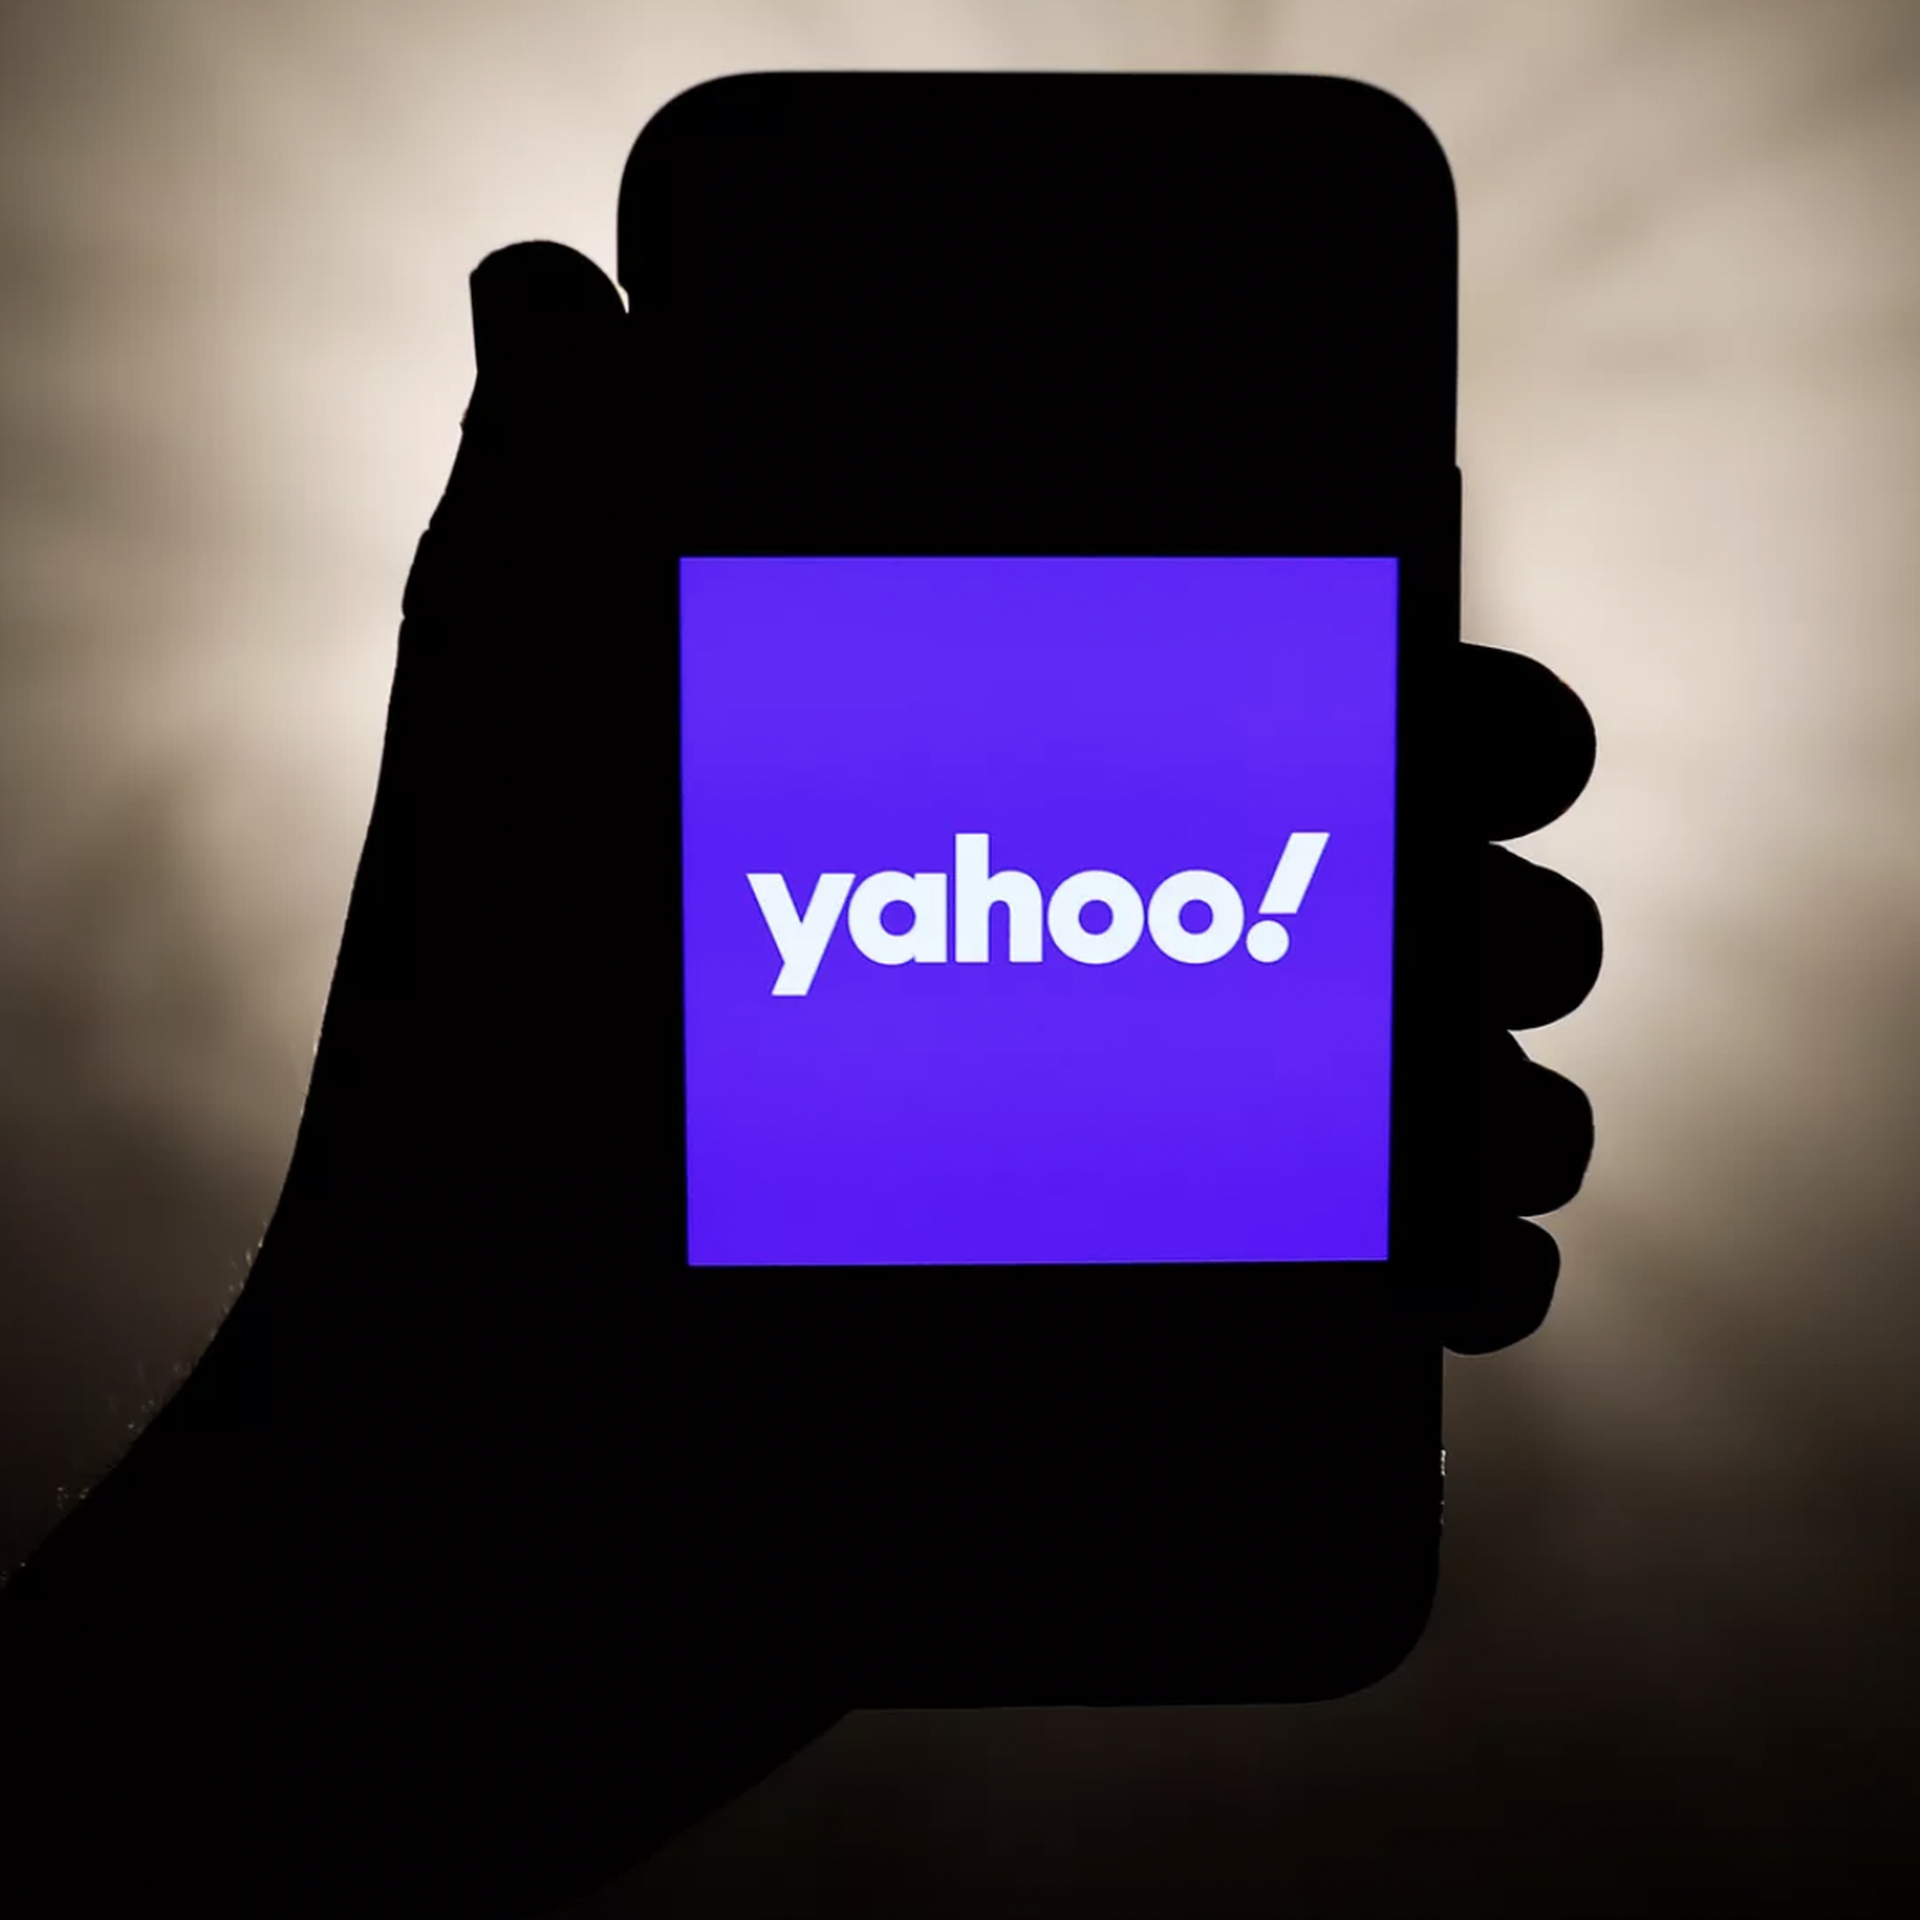 Pot contacta Yahoo telefonic?